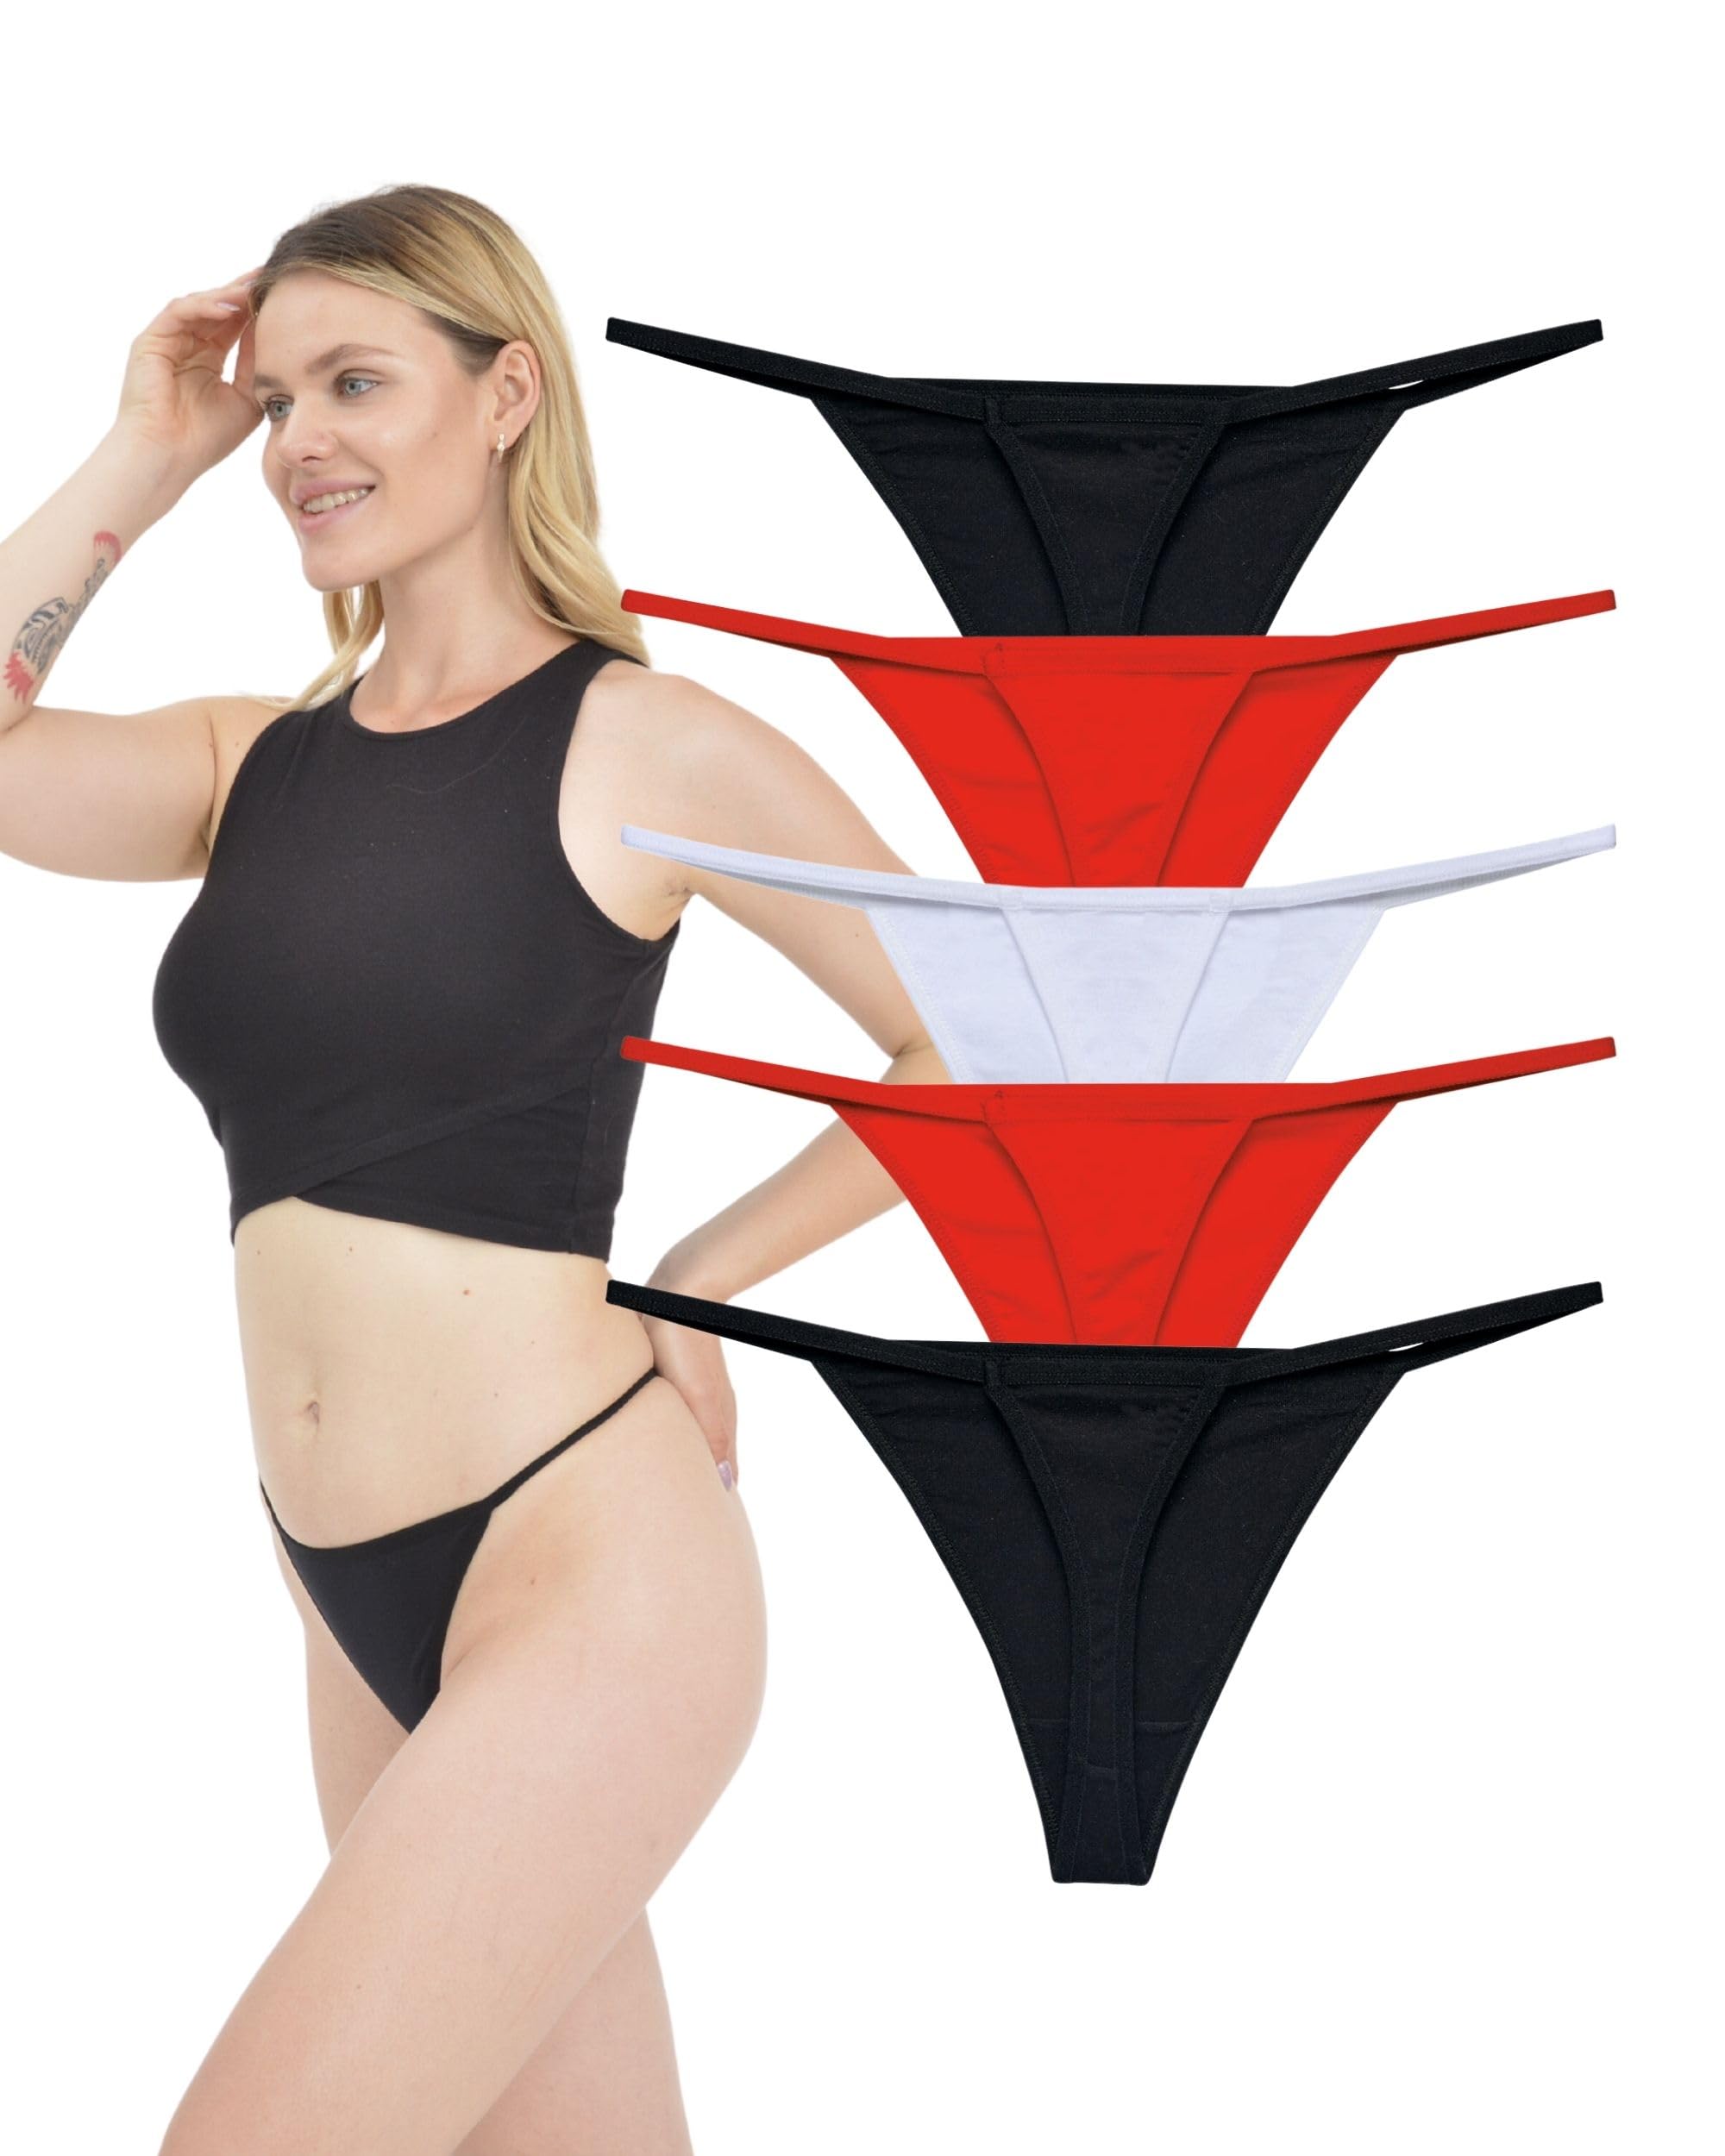 LadyMelex Women's G-string Cotton Red White Black Thong, (S-M-L-XL) Underwear, Pack of 5